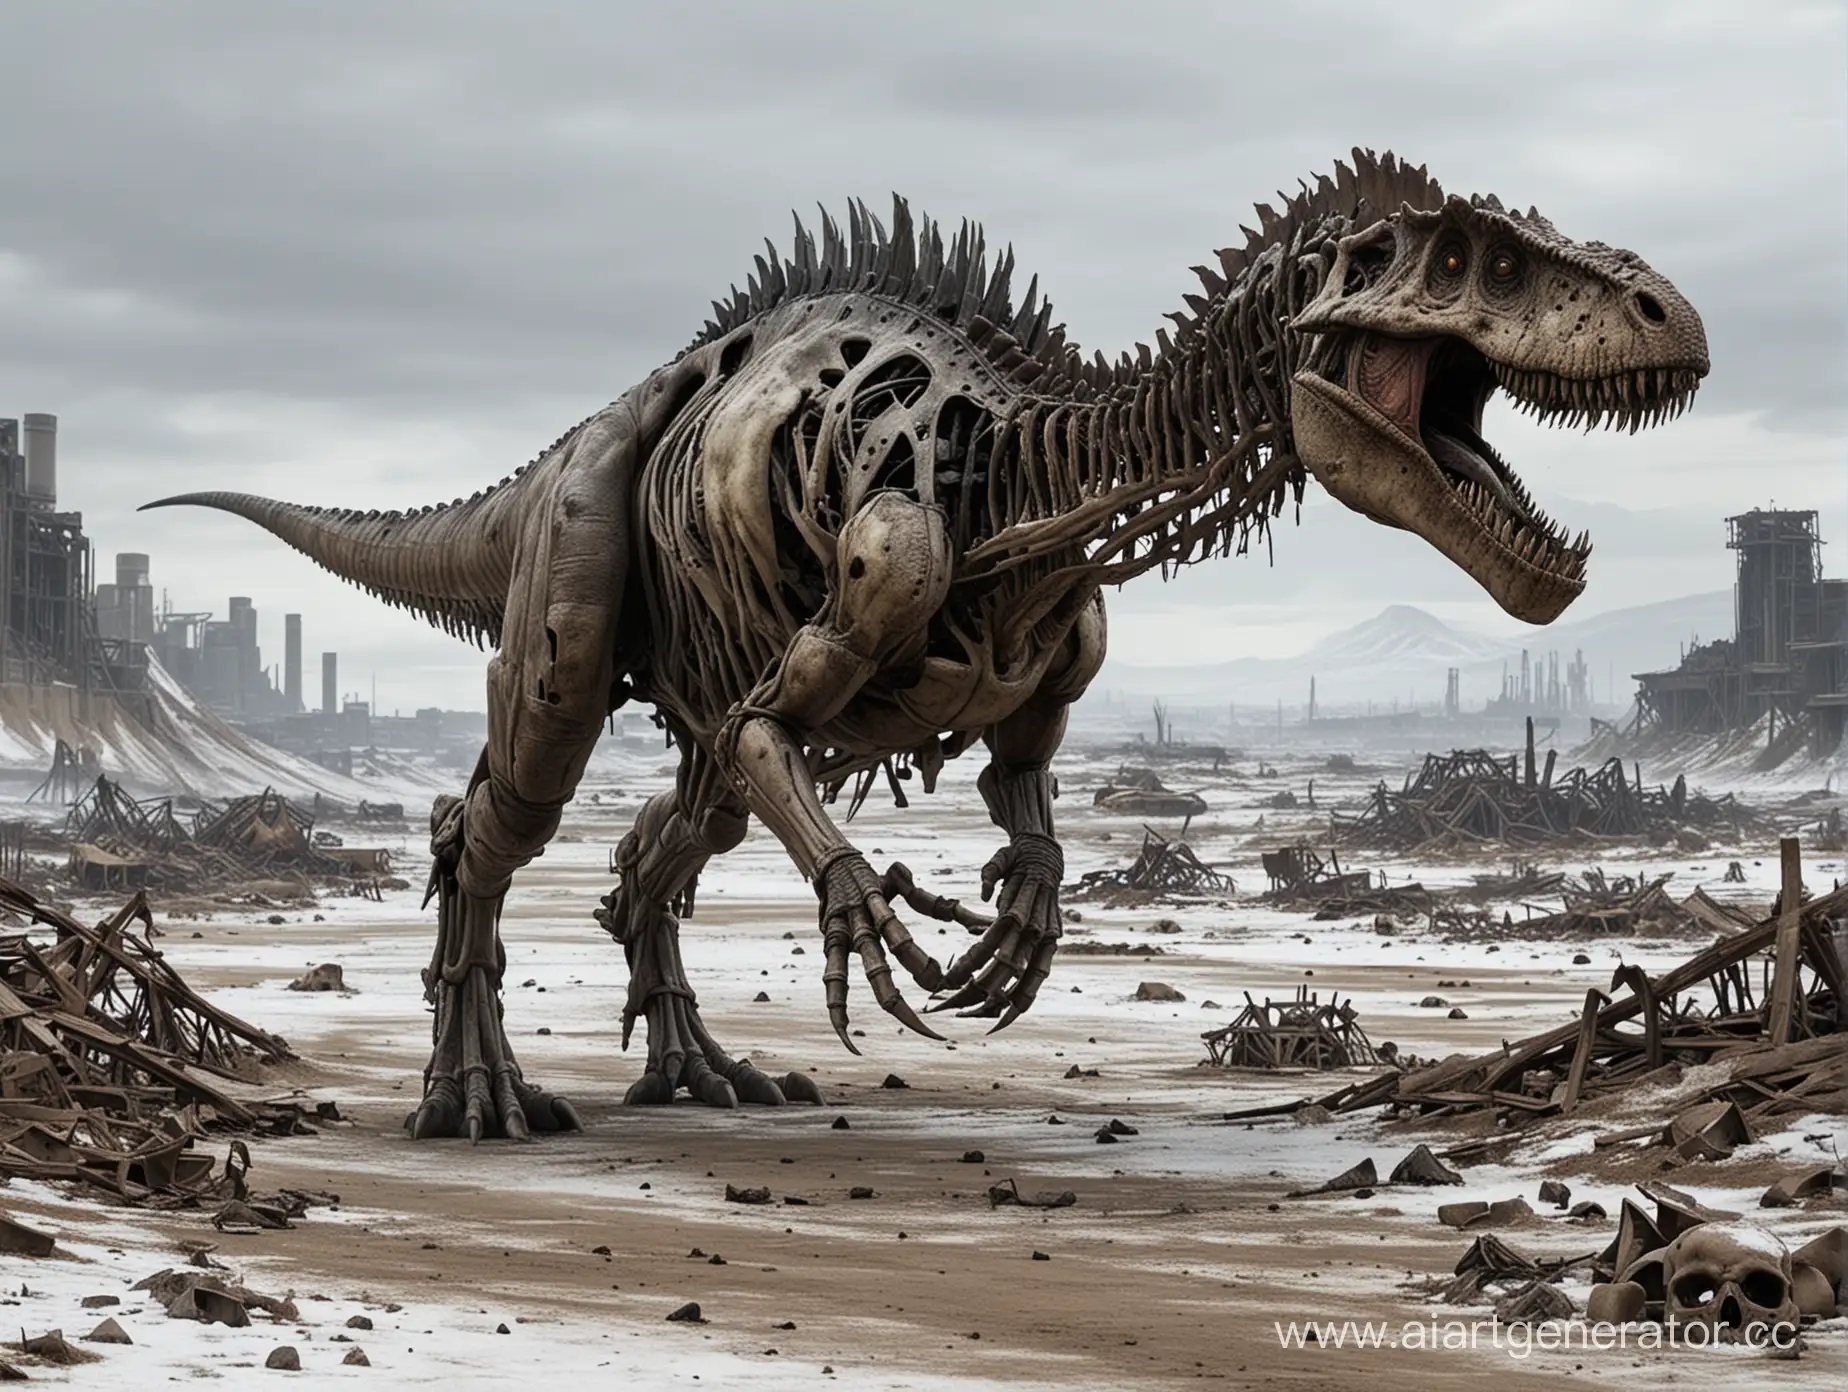 Mutant-Dinosaur-Roaming-Wastelands-of-Human-Bones-in-Nuclear-Winter